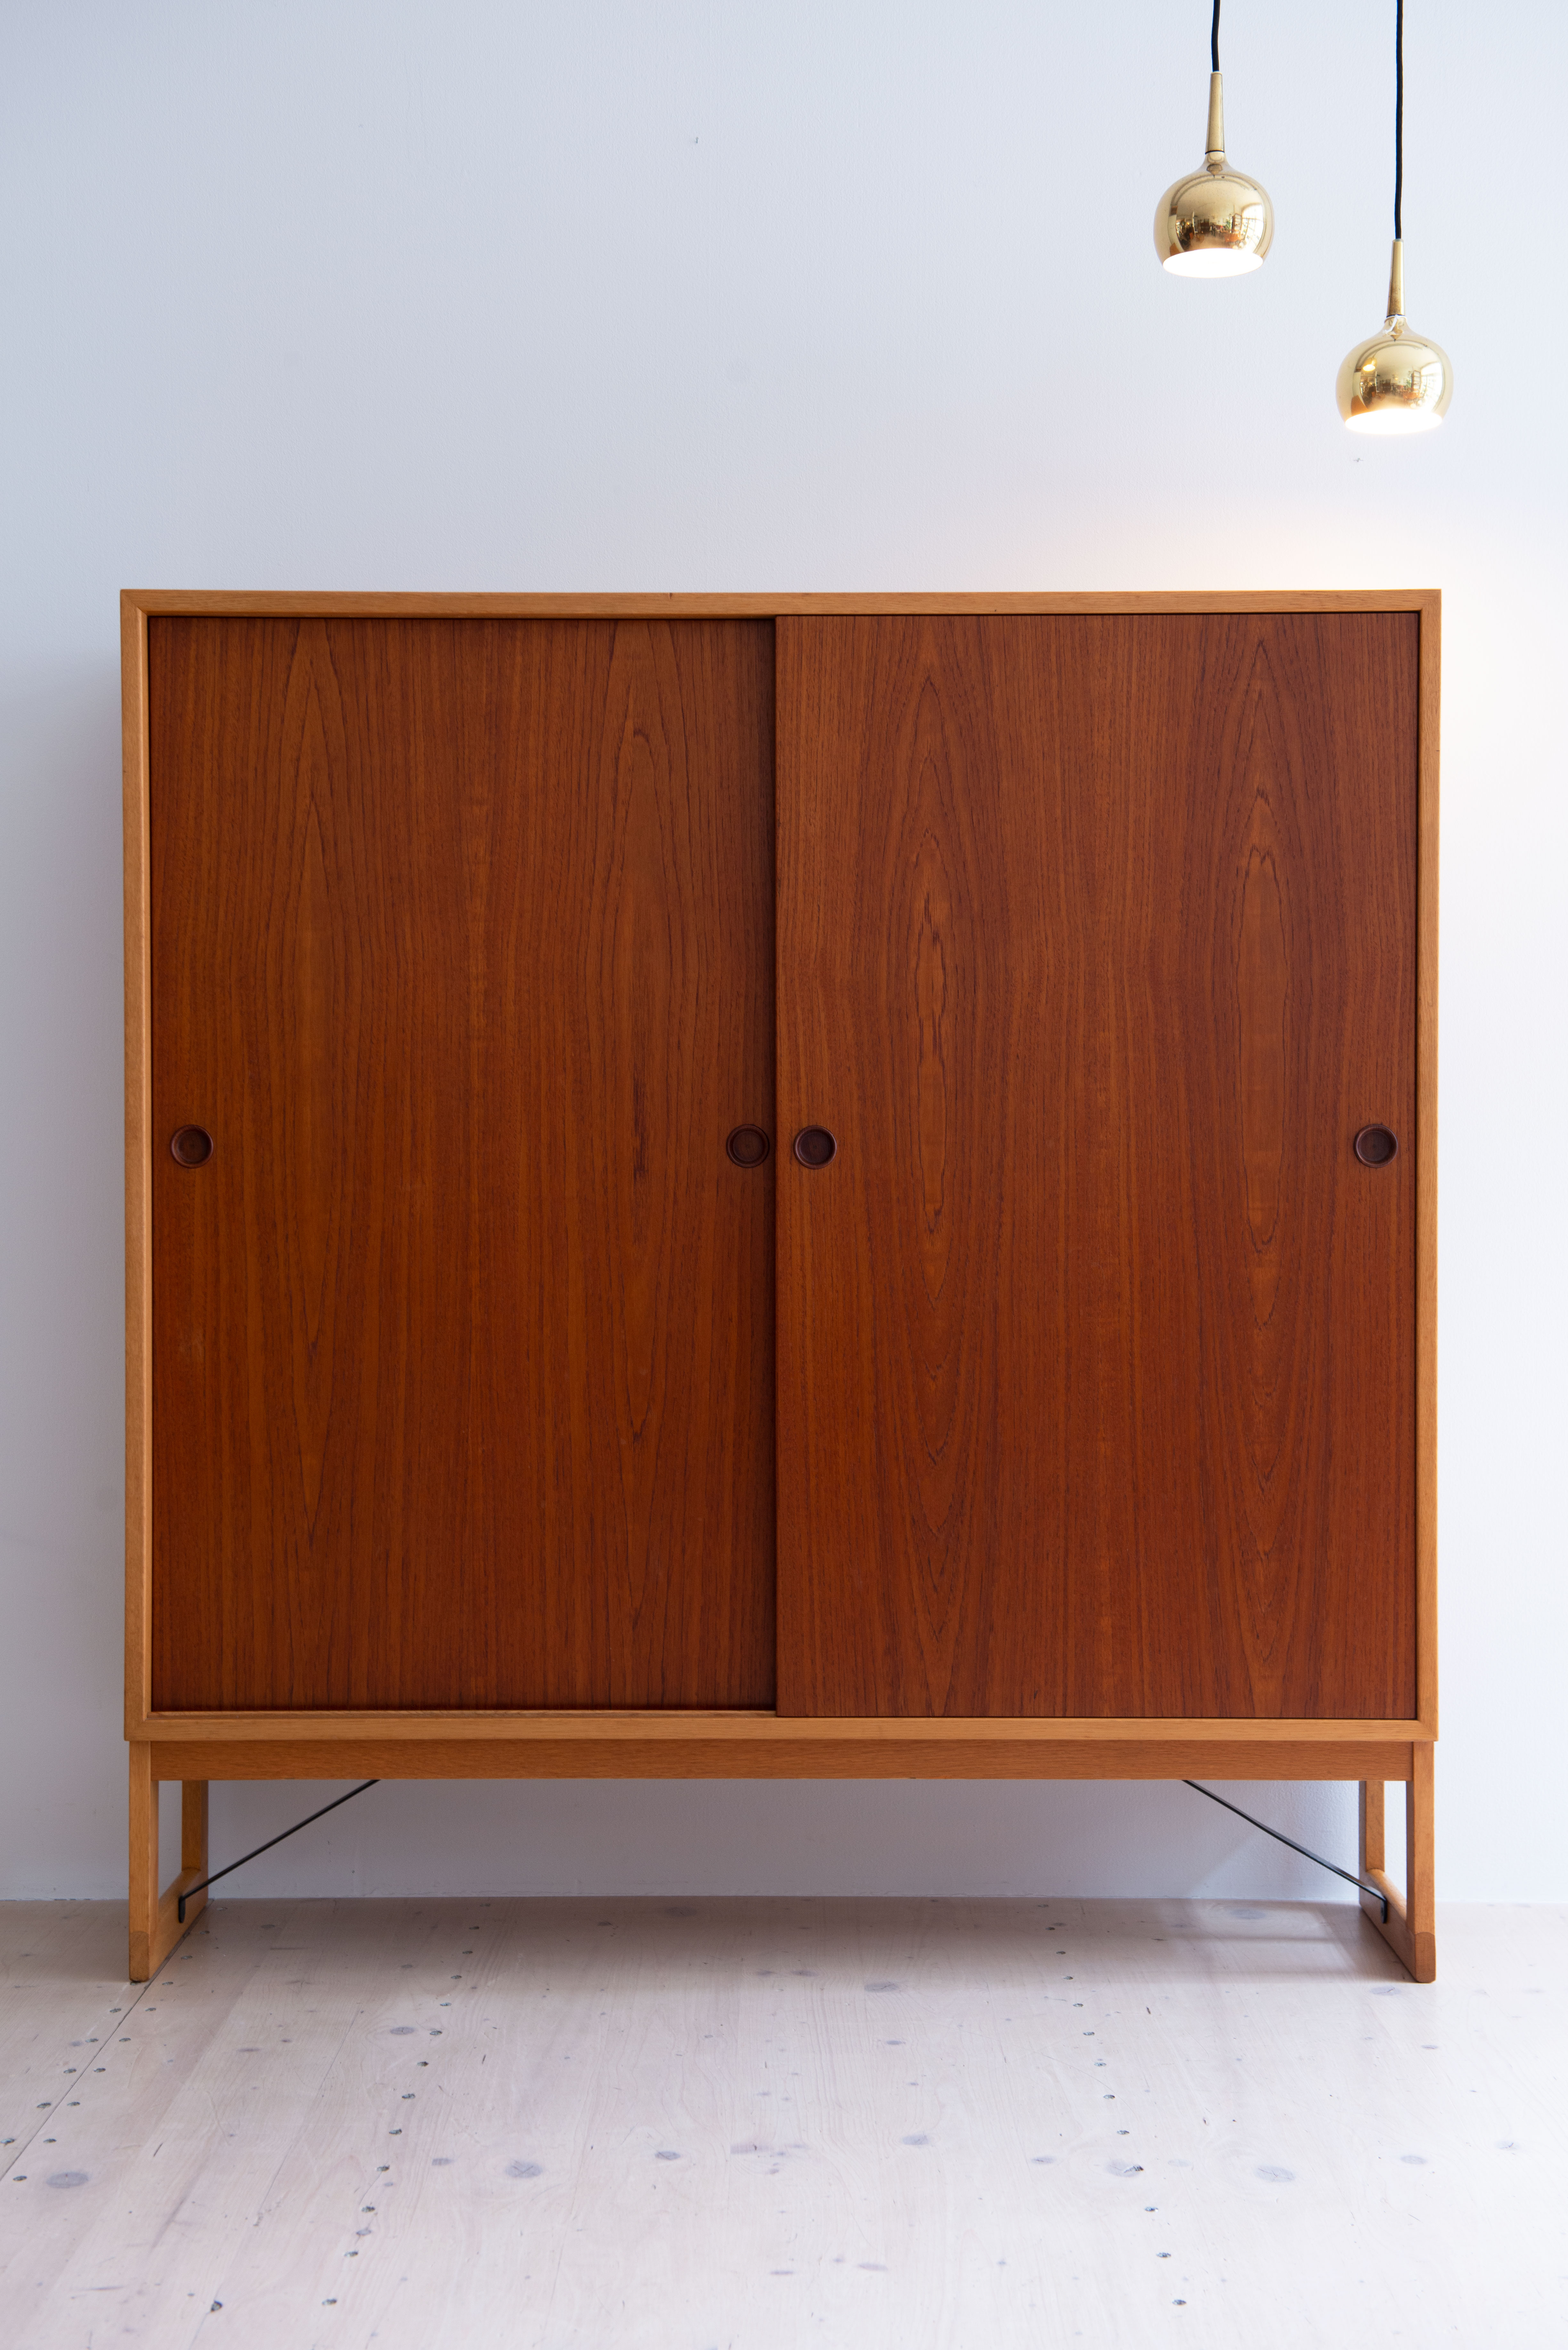 Teak Cabinet by Børge Mogensen. Produced by Karl Andersson & Söner in Denmark, 1959. Available at heyday möbel, Grubenstrasse 19, 8045 Zürich. Mid-Century Modern Furniture and Other Stuff.